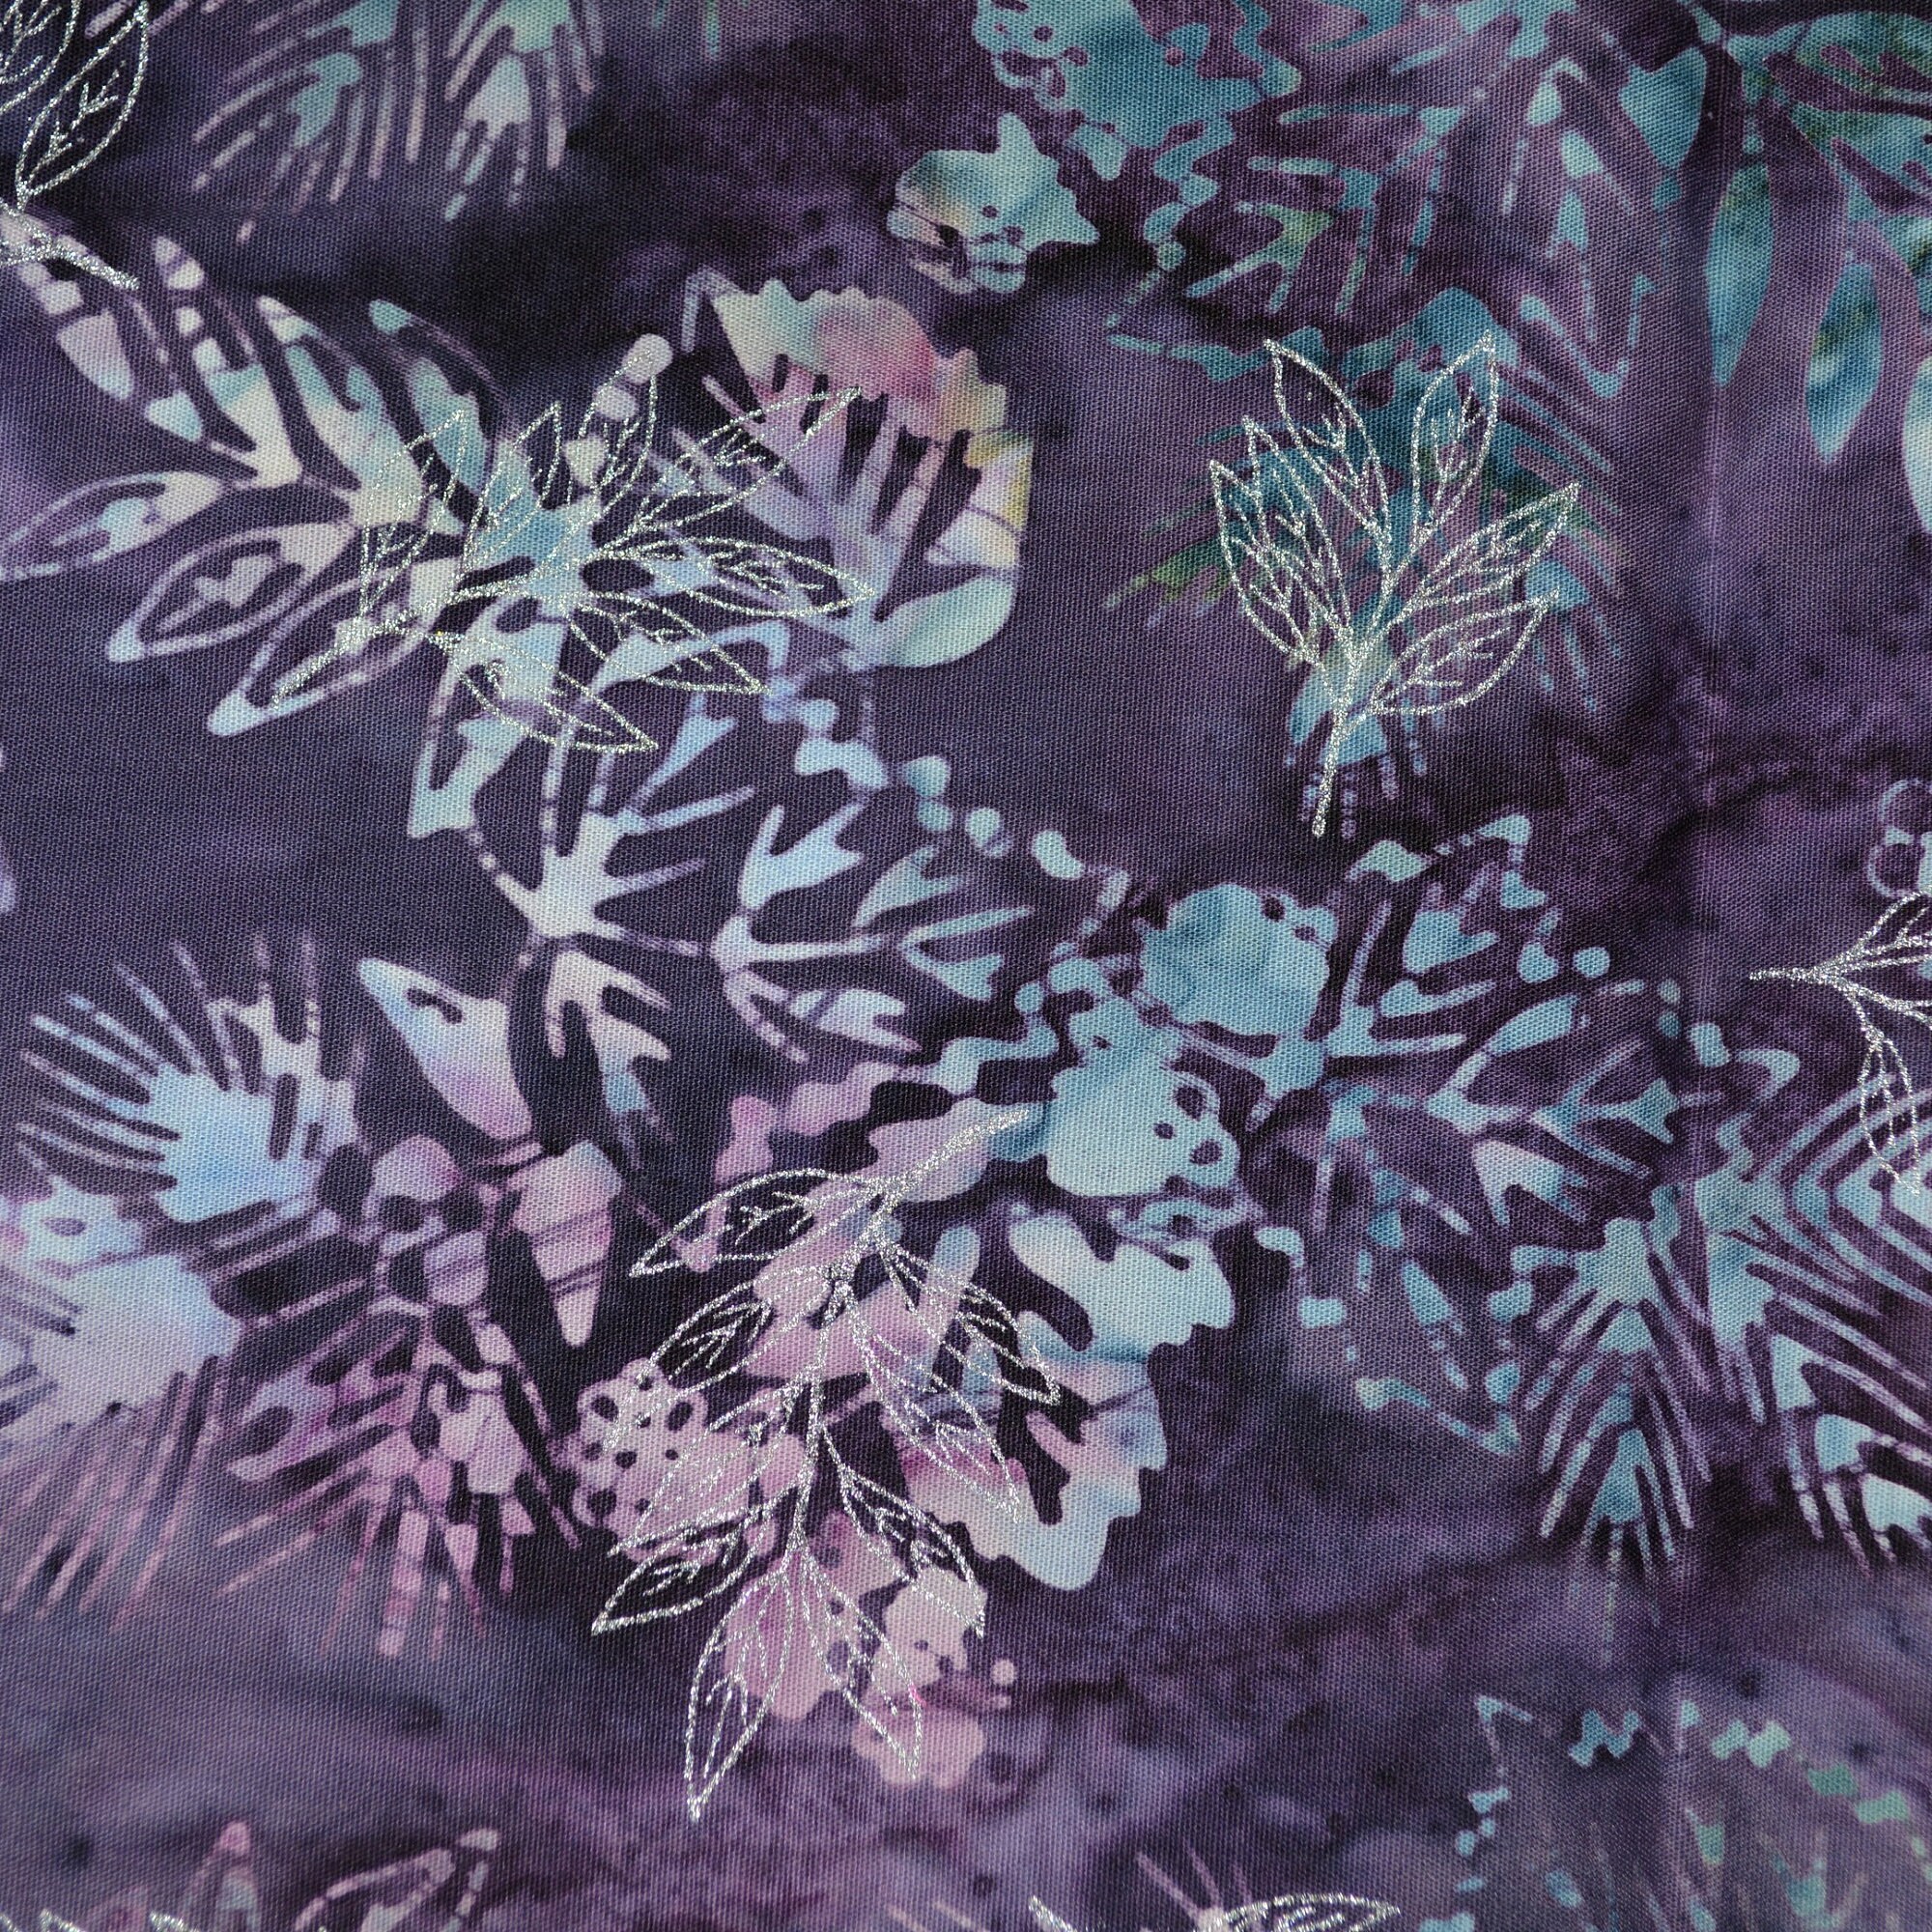 Purple blender Batik fabric, tie dyed batik with leaves